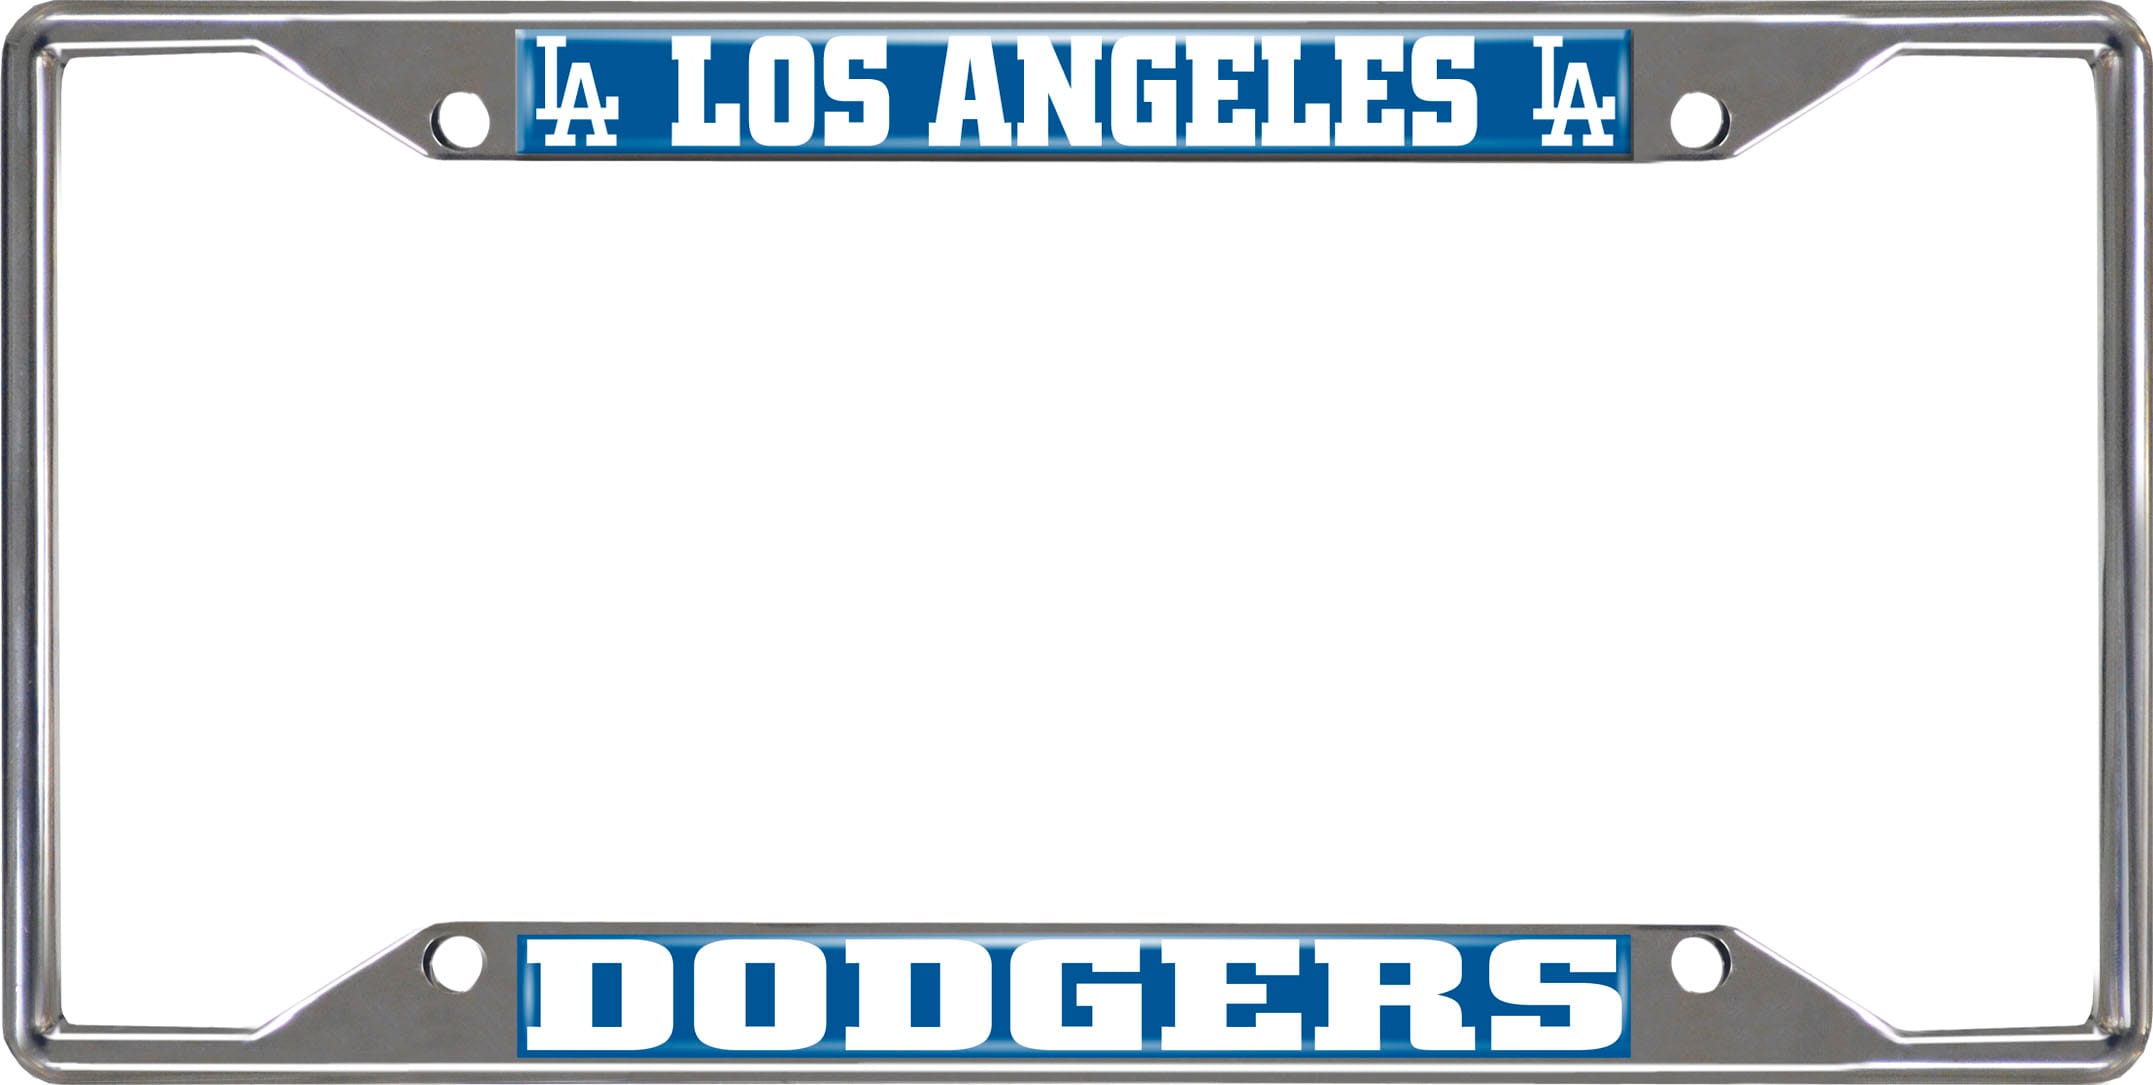 Fan Mats 31309 MLB Baseball Los Angeles Dodgers License Plate